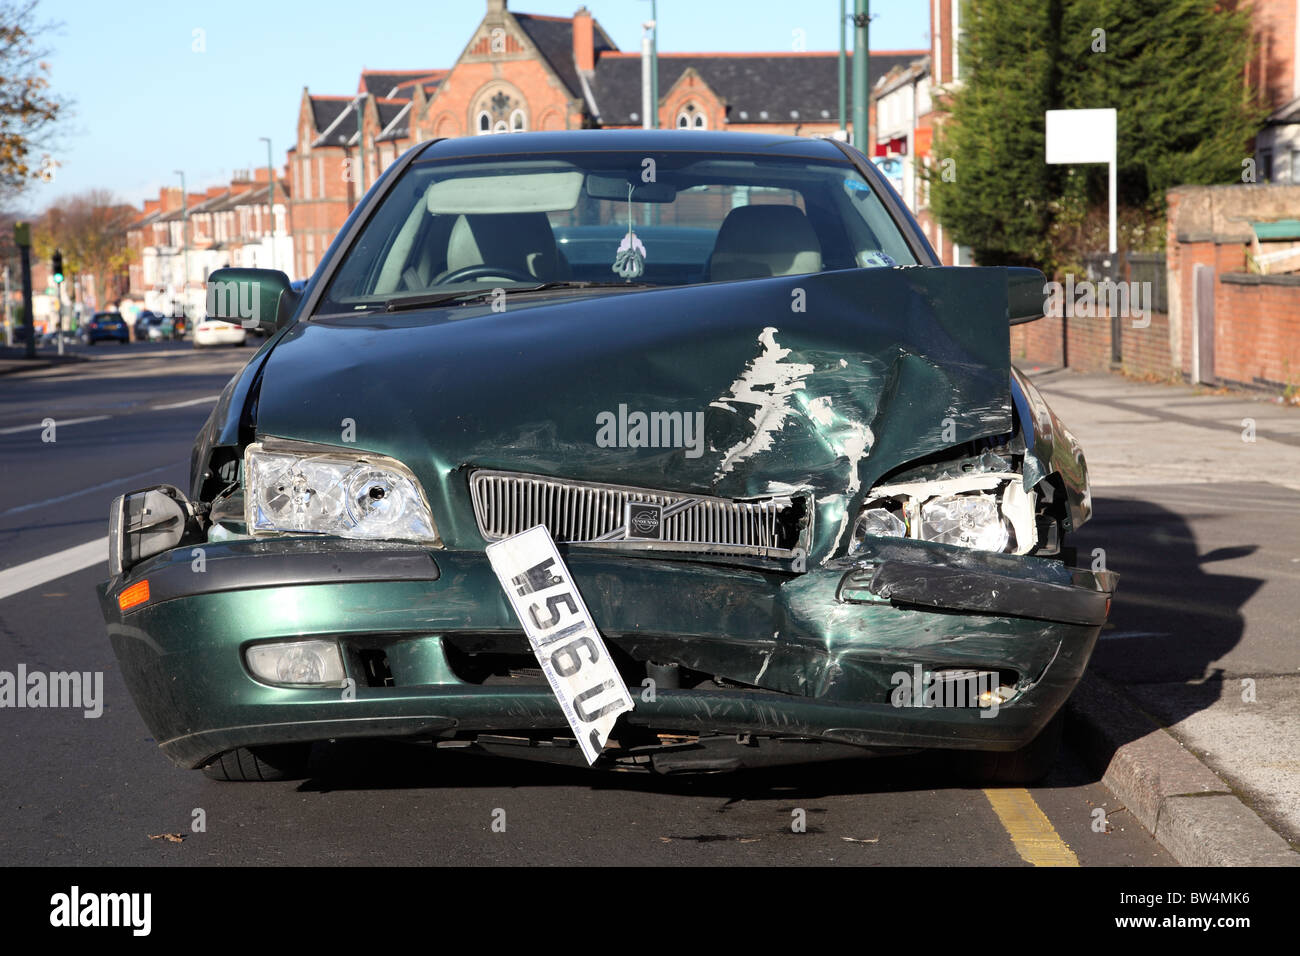 An accident damaged car on a U.K. street. Stock Photo